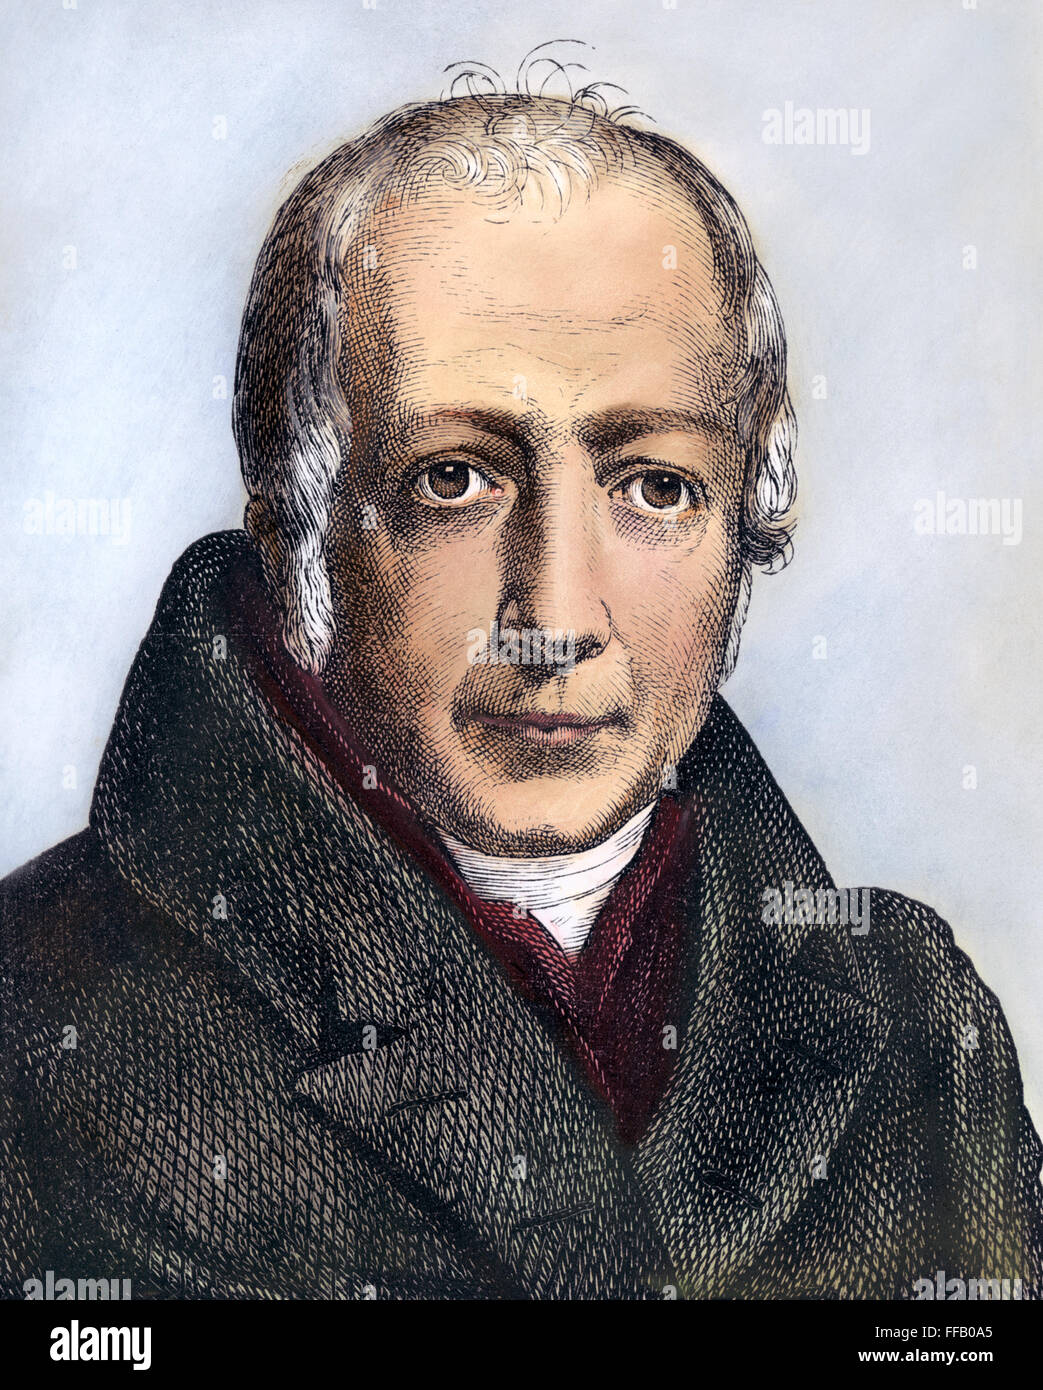 WILHELM von HUMBOLDT /n(1767-1835). German philologist and diplomat. Line engraving, 19th century. Stock Photo